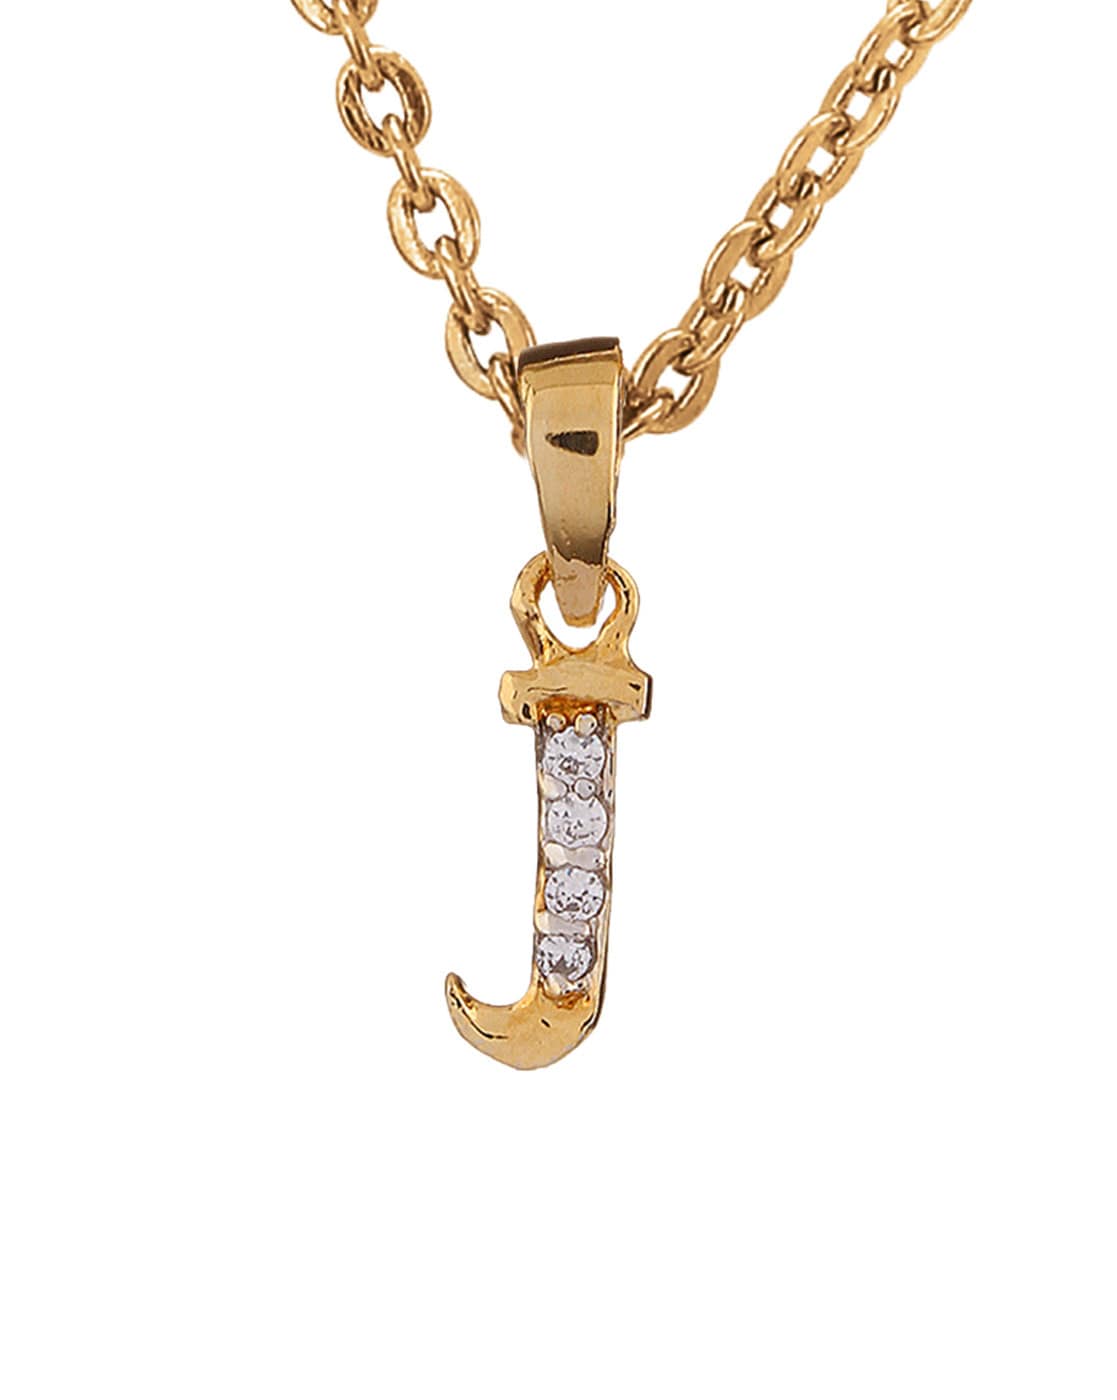 J-shaped Pendant Necklace – Ciunofor